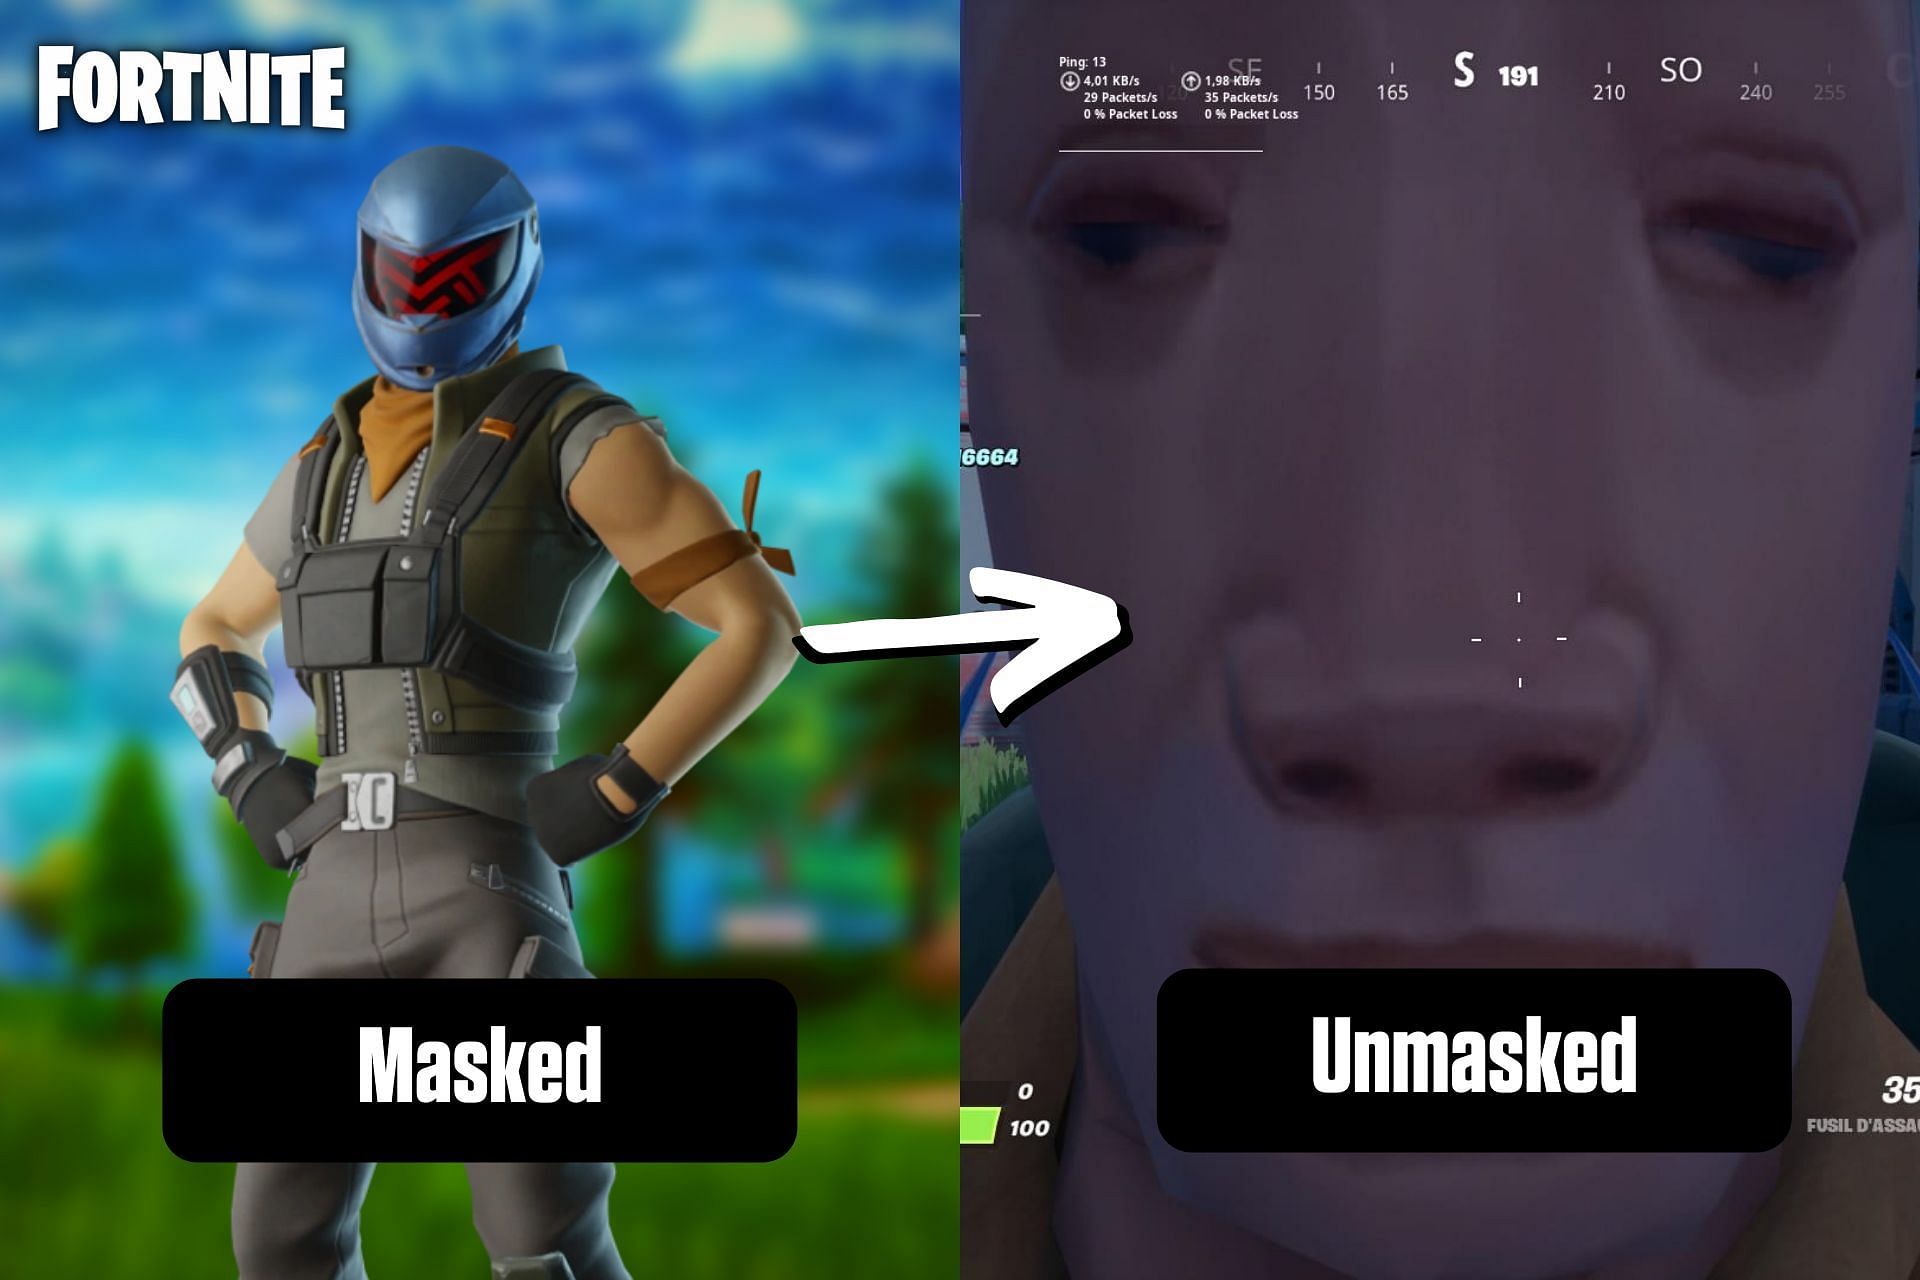 Masked skins in Fortnite (Image via Sportskeeda)